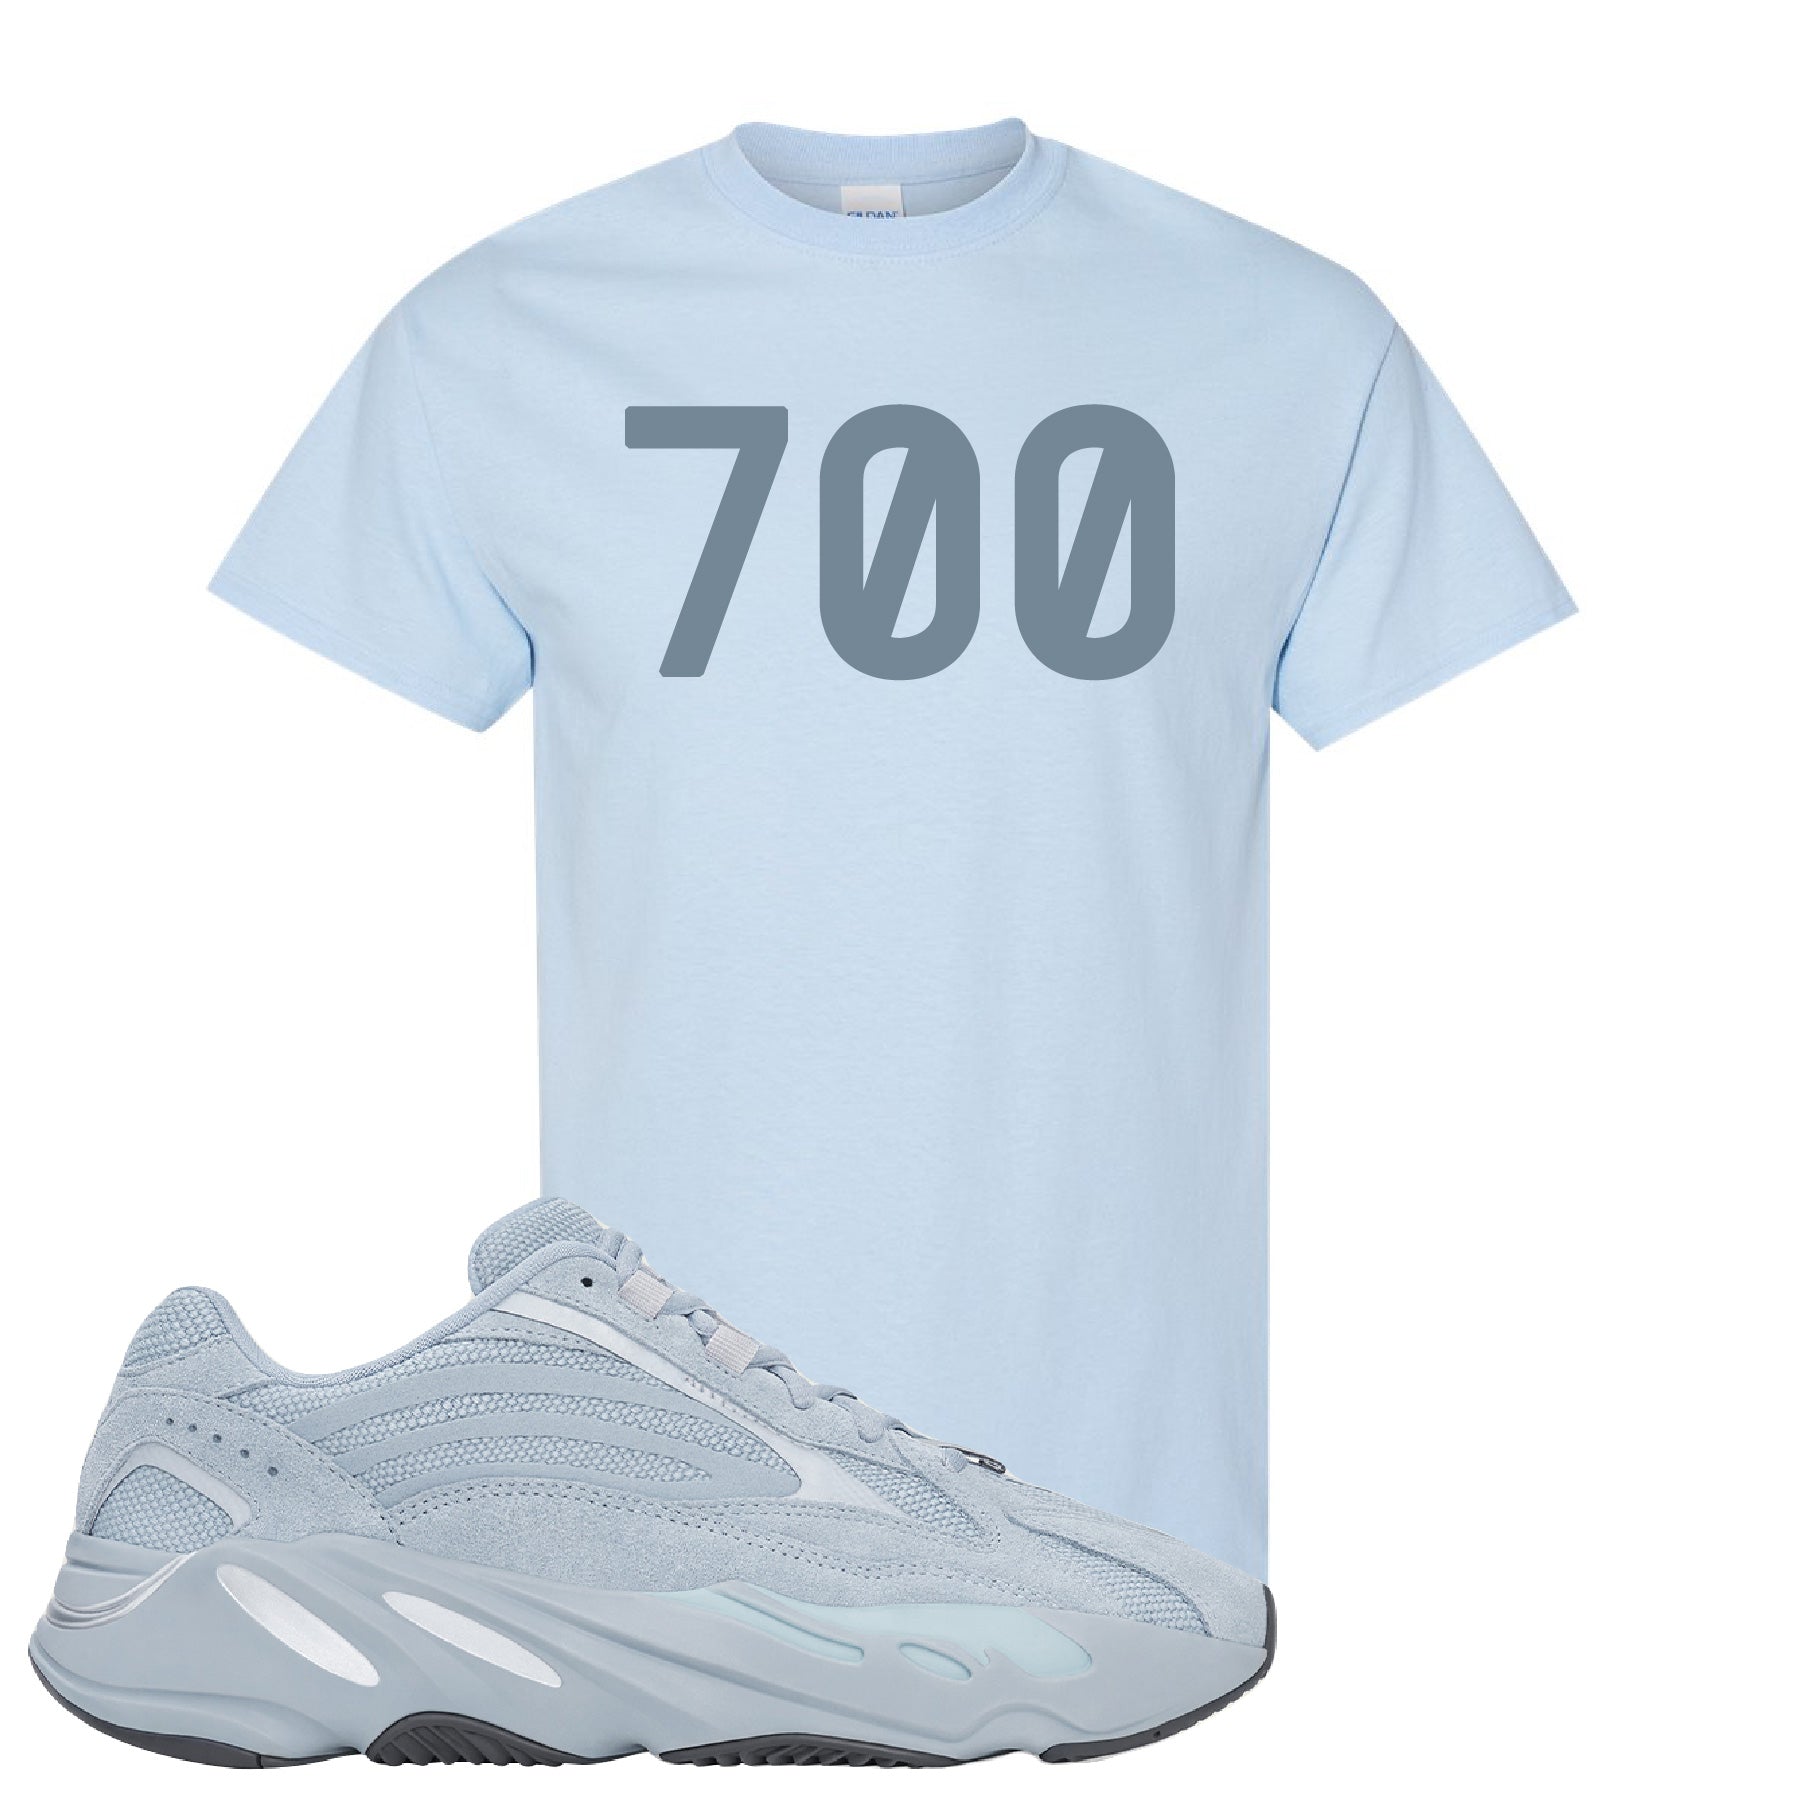 yeezy 700 light blue